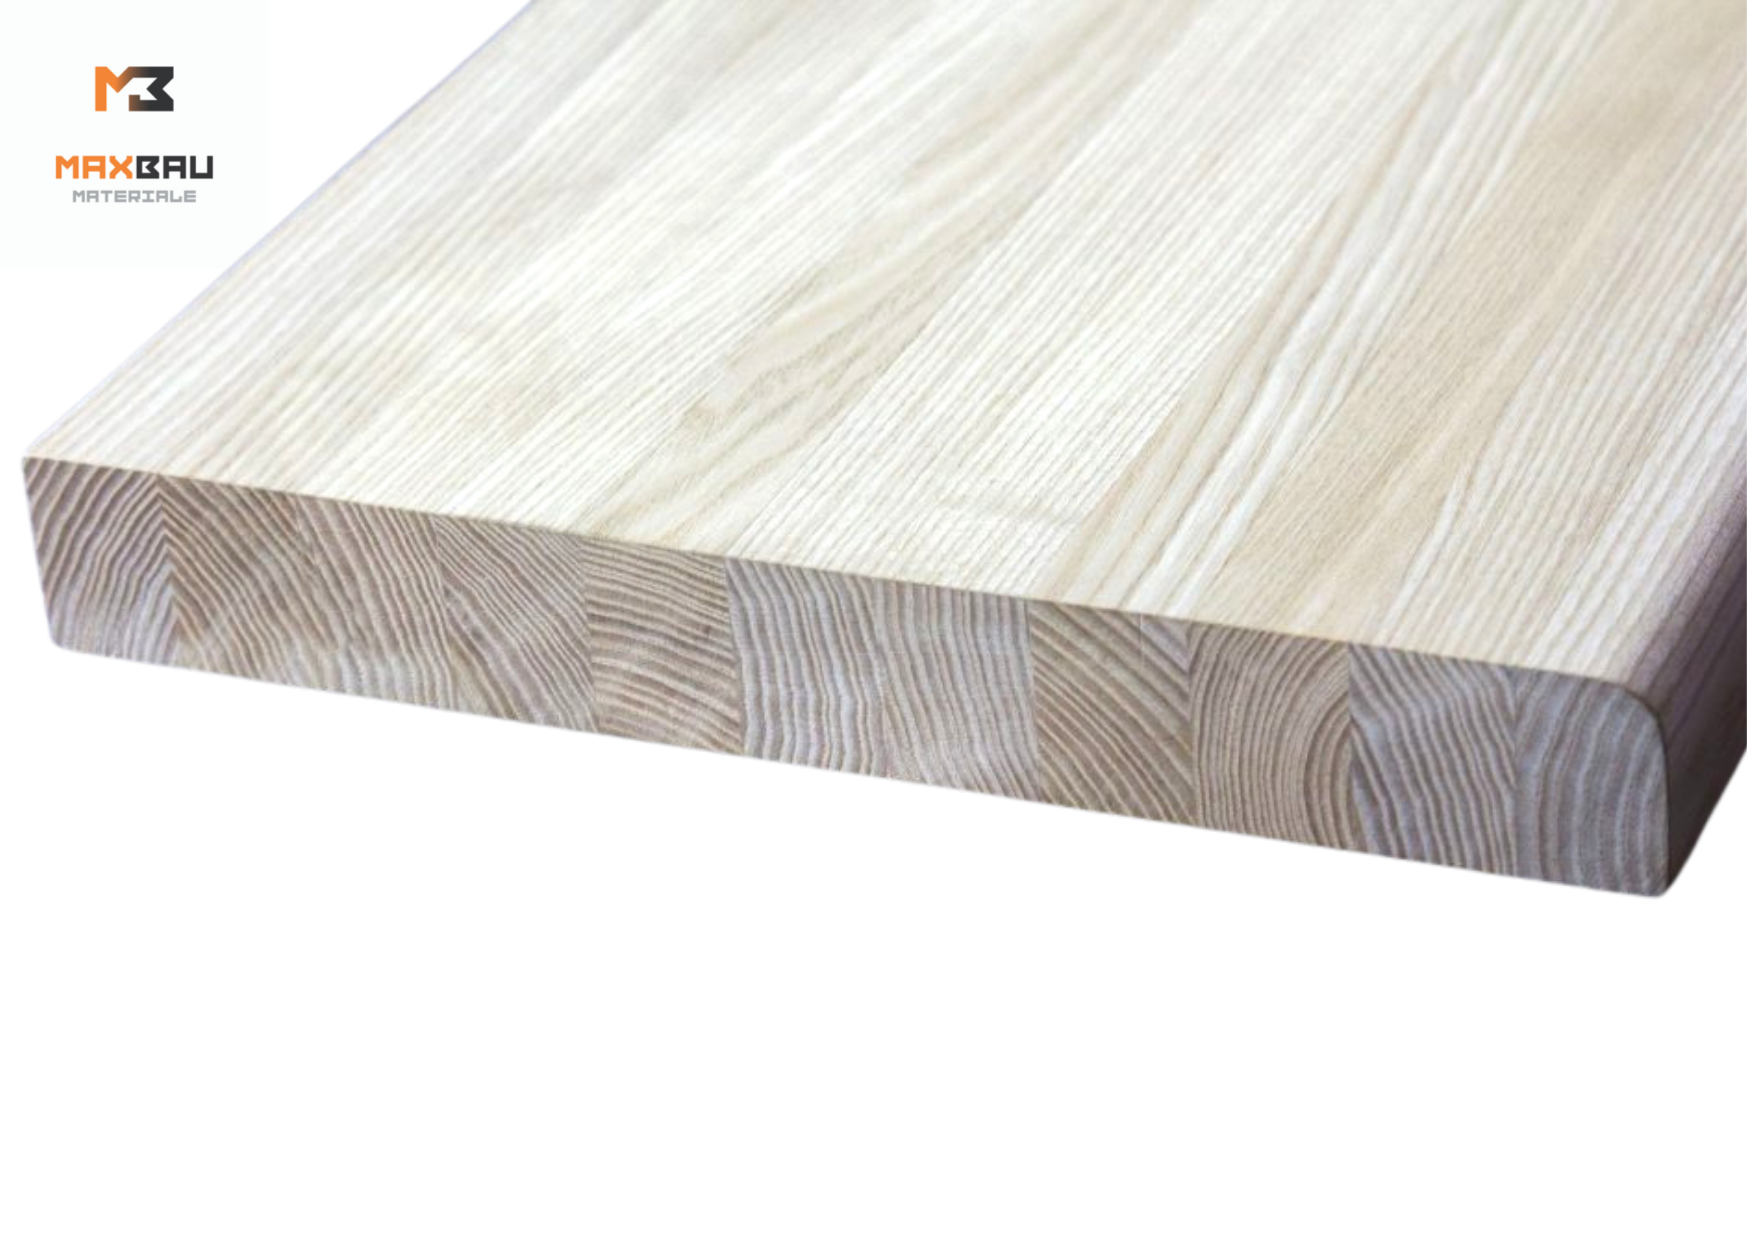 Plates of glued wood - MaxBau wooden plate glued 2000 x 300 x 28 mm class AB, https:maxbau.ro